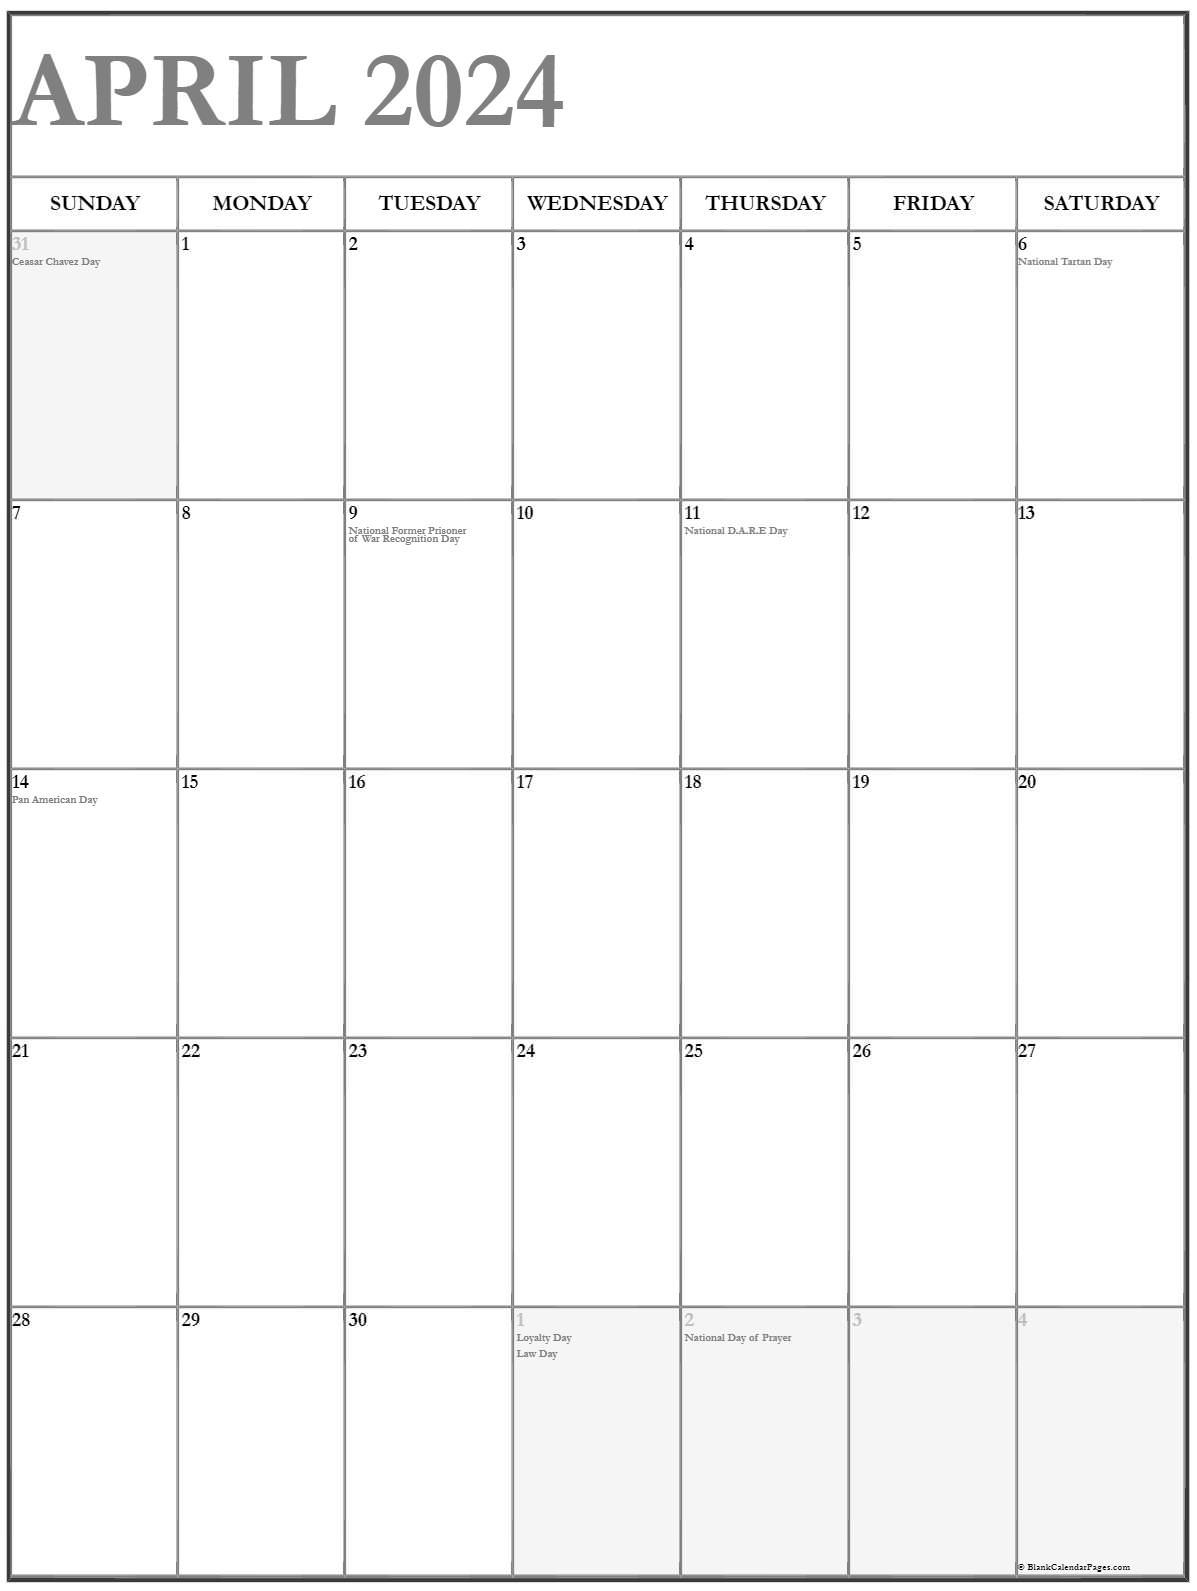 free-printable-april-2023-calendar-12-templates